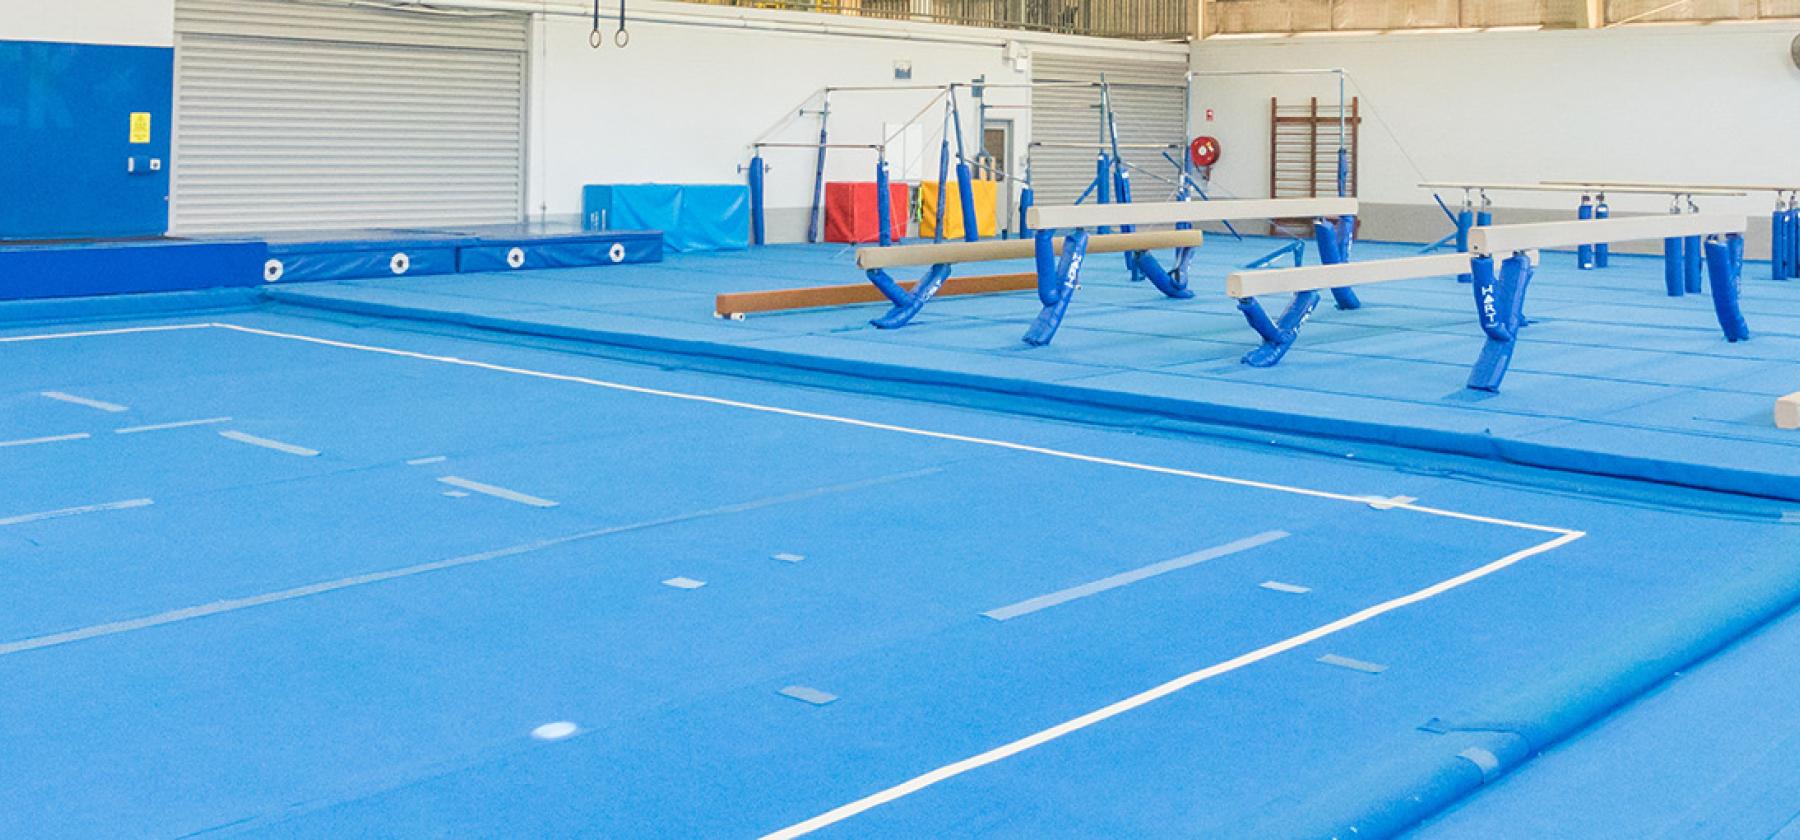 Gym room, soft floor and gymnastics equipment.